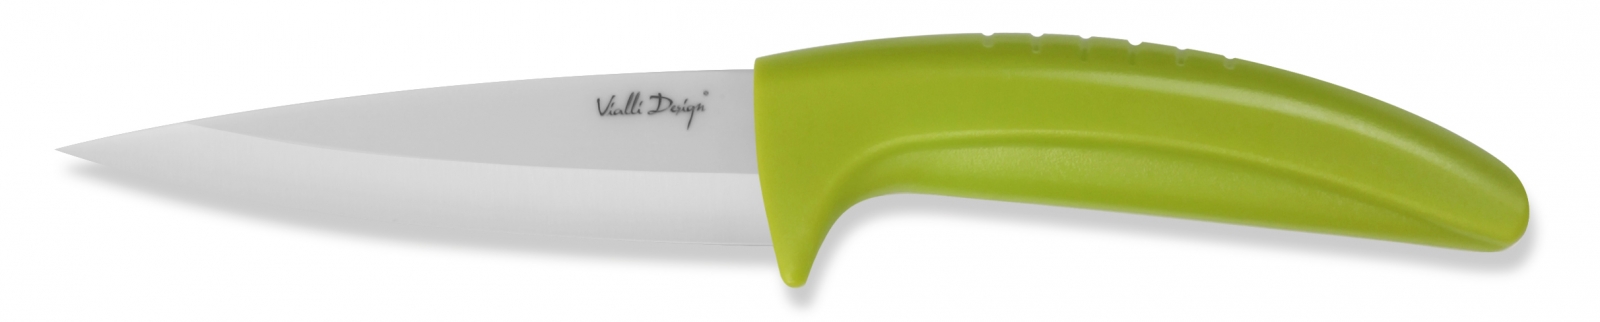 Nóż ceramiczny do obierania 9,5 cm W095AG Vialli Design